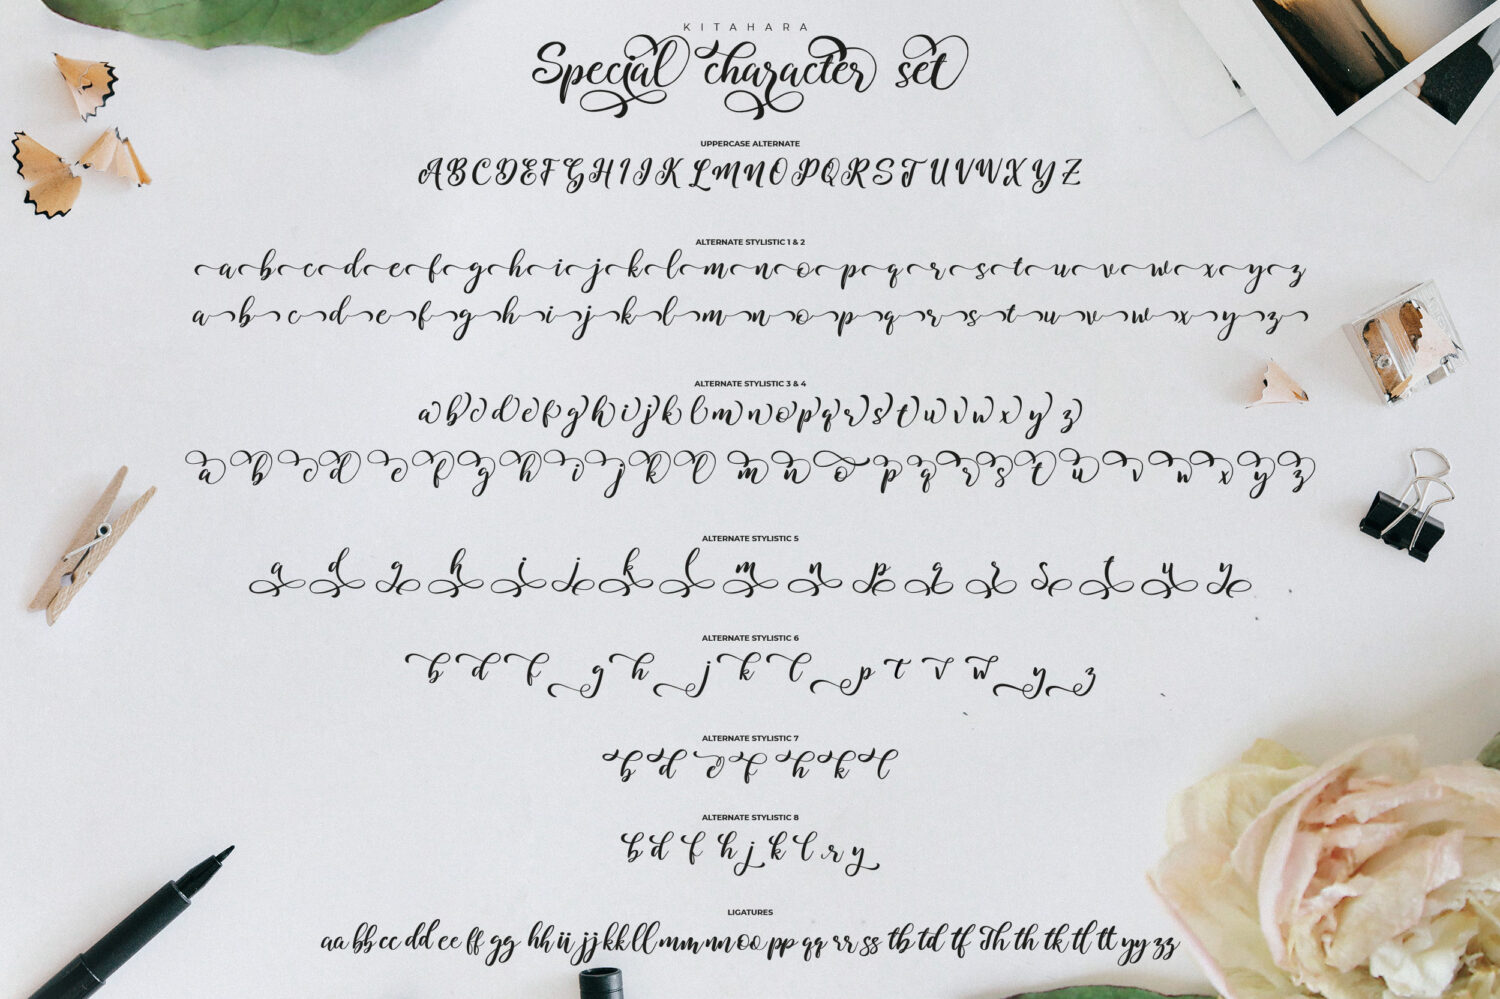 Kitahara Script Free Font